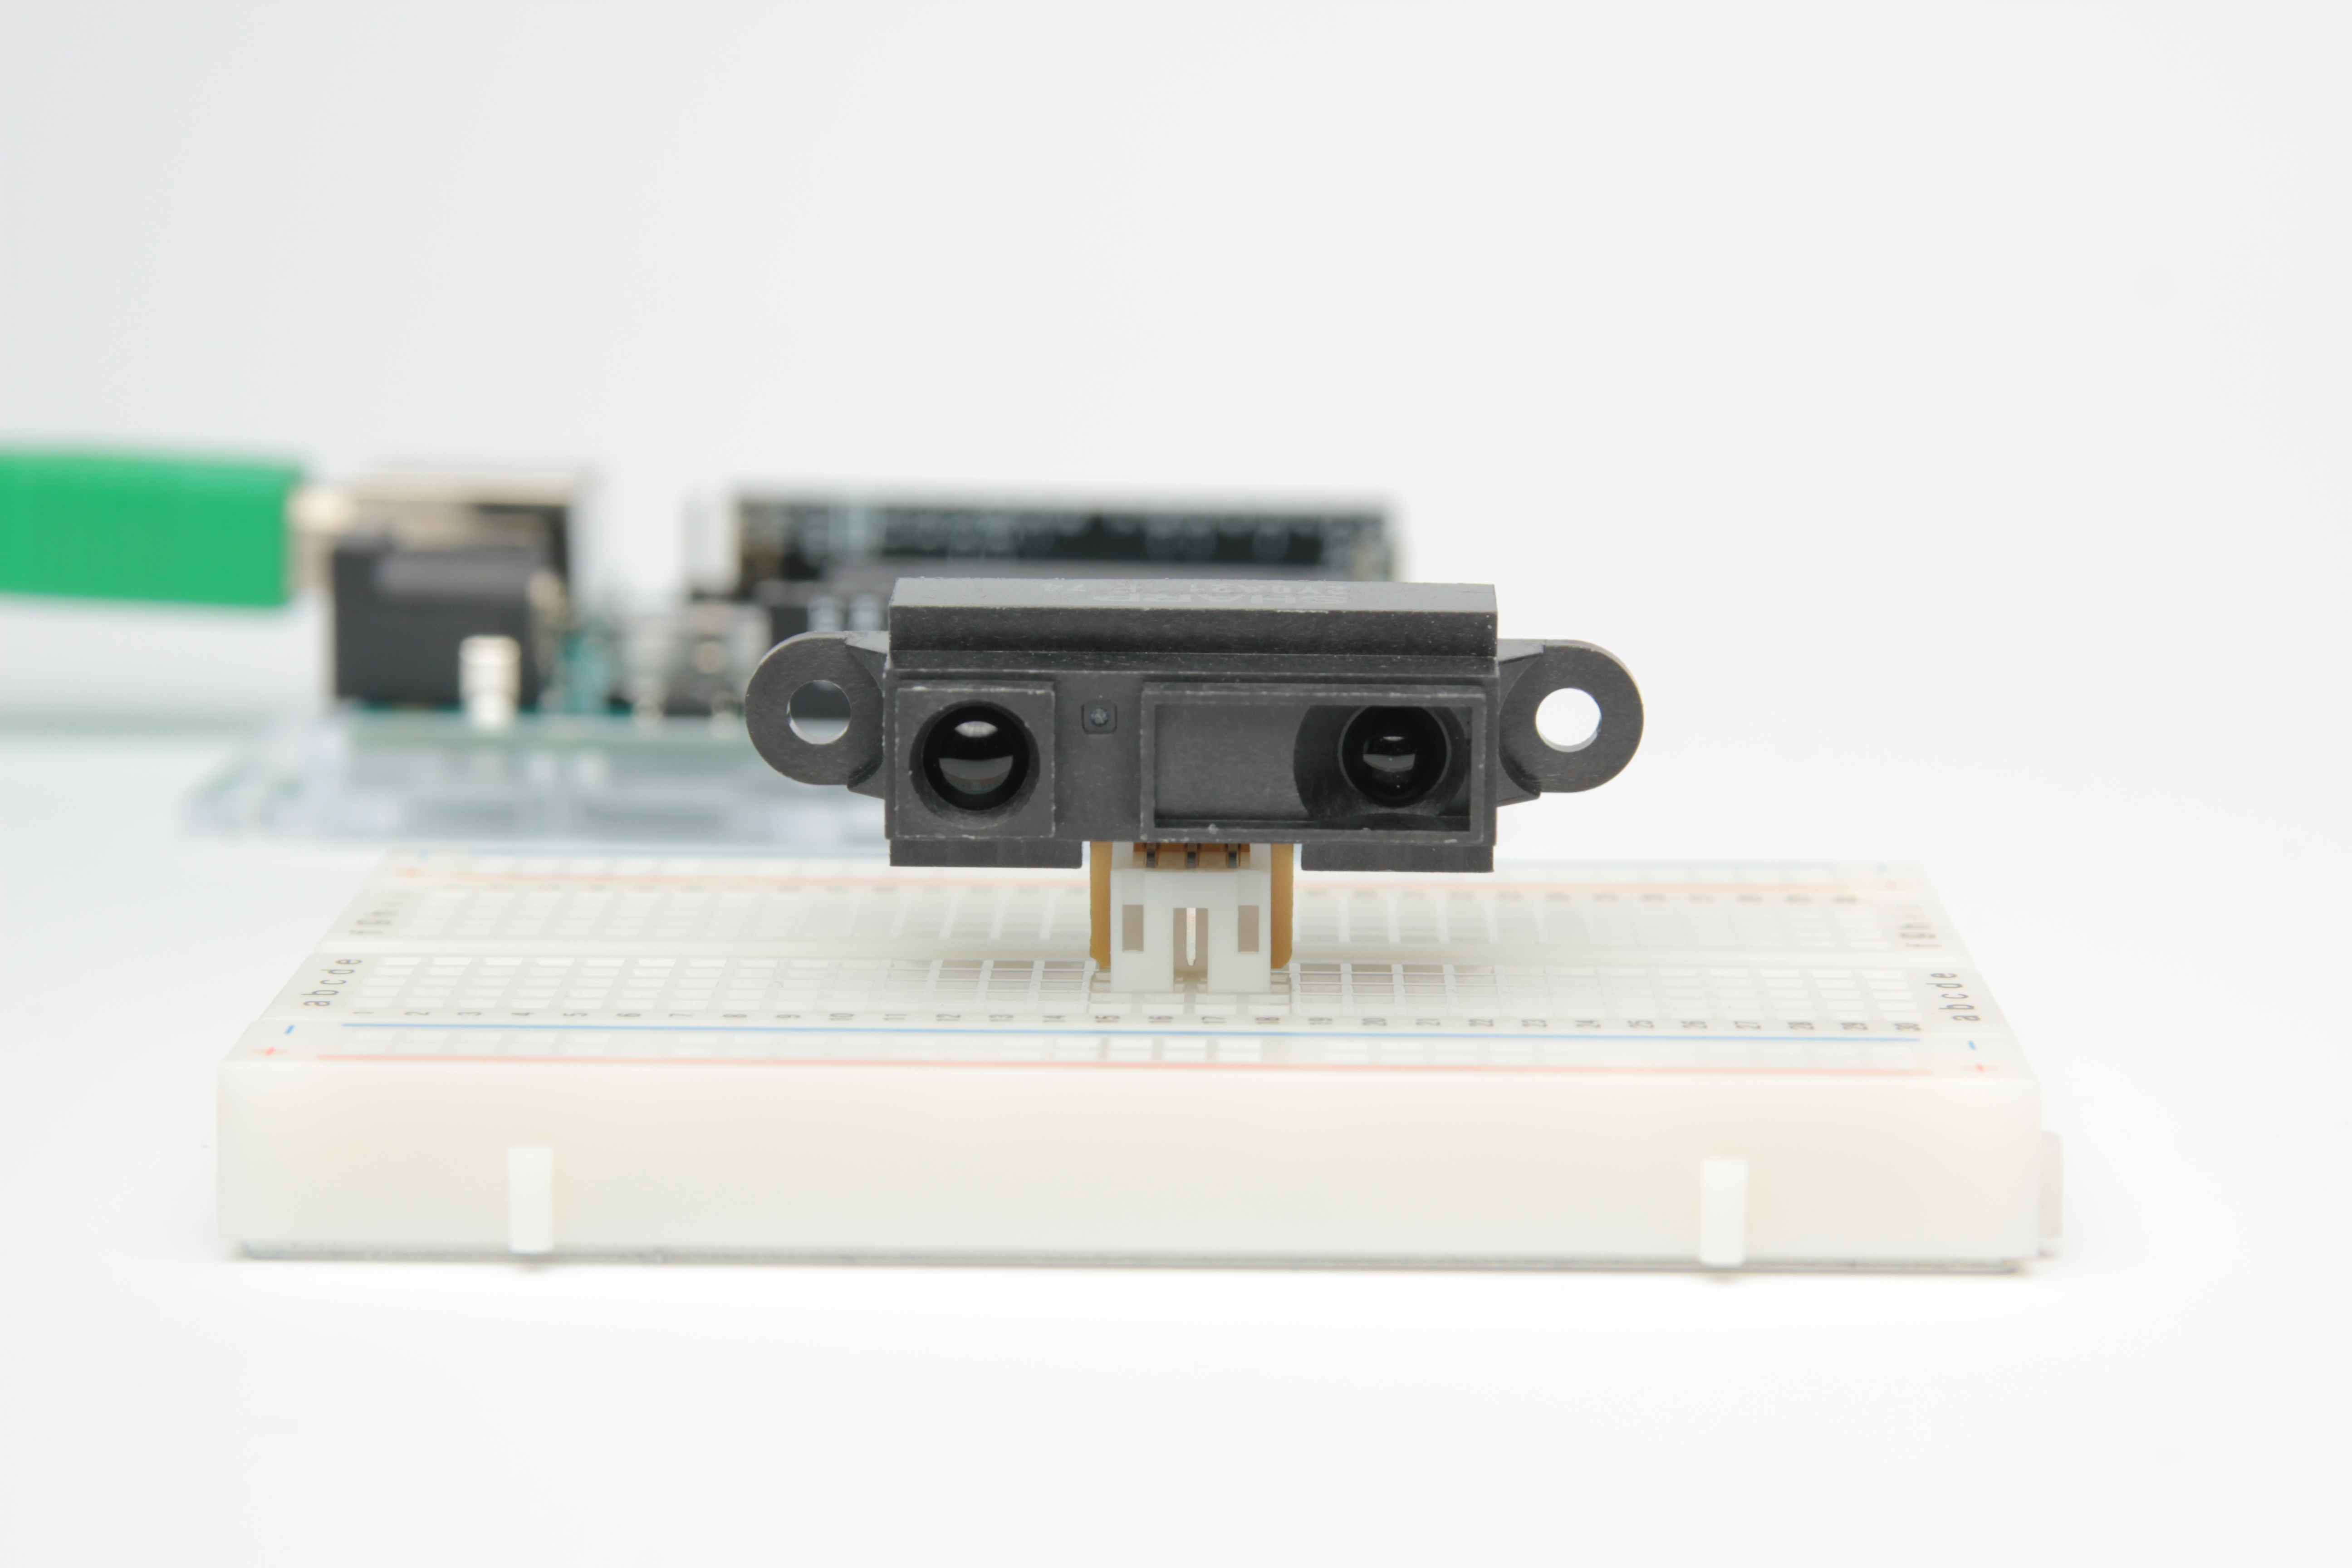 Sharp GP2Y0A21YK IR Range Sensor for Arduino ect Infrared Proximity Sensor 